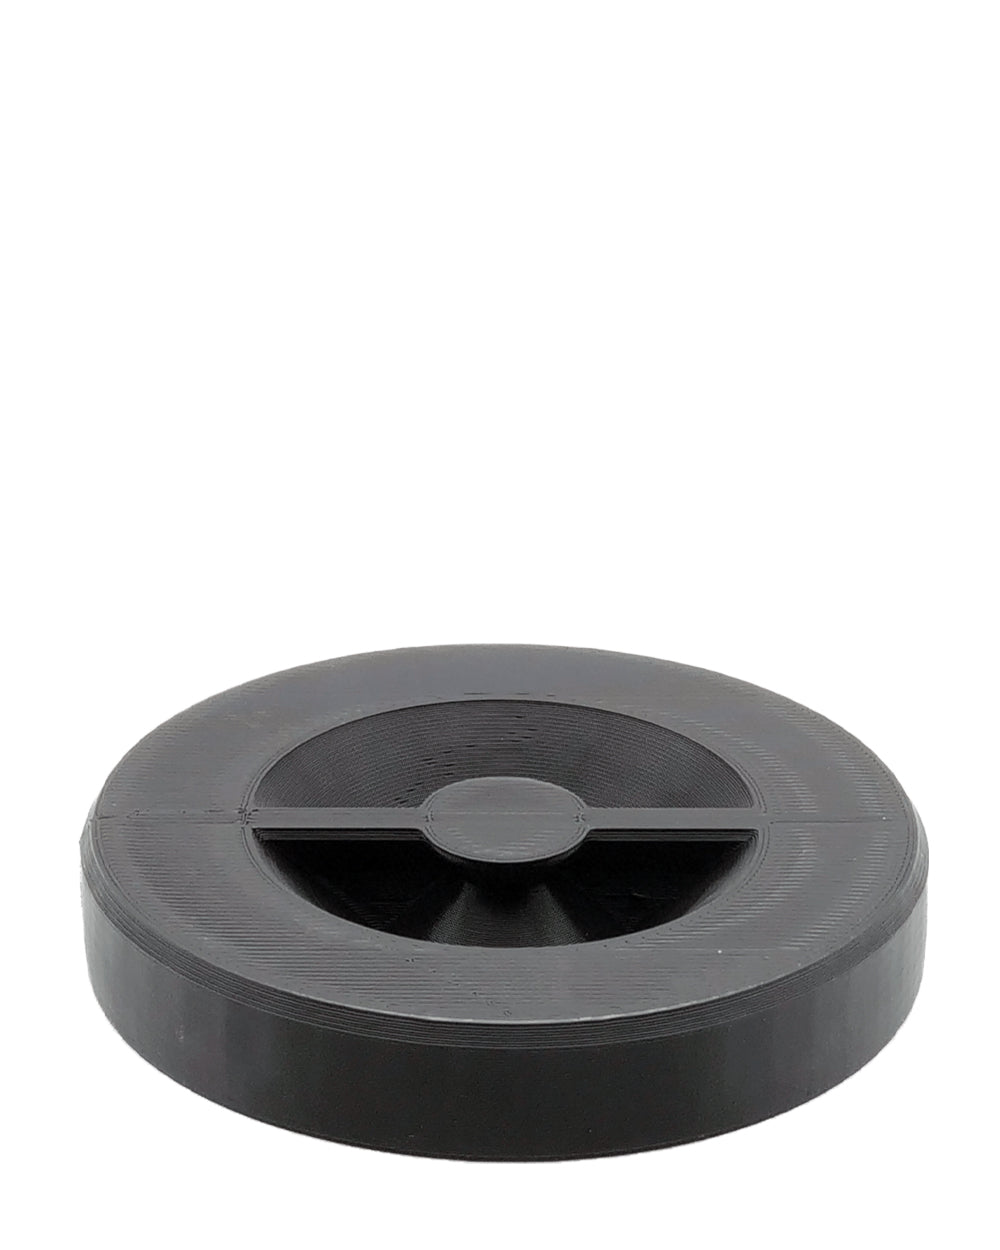 HUMBOLDT | Black Pre-Rolled Cones Filling Machine Starter Kit 98mm | Fill 121 Cones Per Run